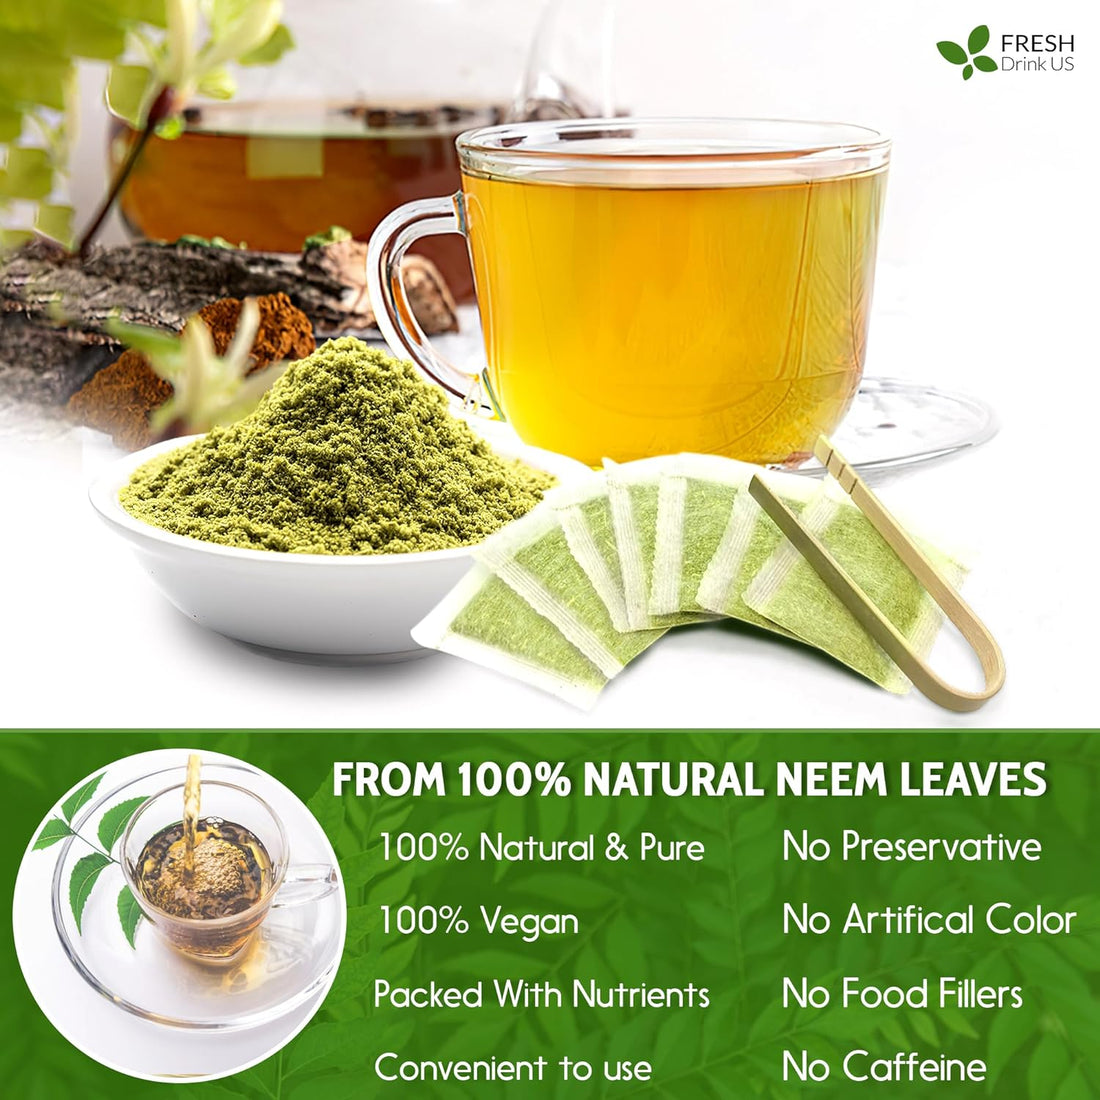 Neem Leaf Tea Bags, 100% Natural and Pure from Neem Leaves. Loose Leaf Neem Herbal Tea. Neem Leaf Tea. No Sugar, No Caffeine, No Gluten, Vegan. - FreshDrinkUS - Natural and Premium Herbal Tea